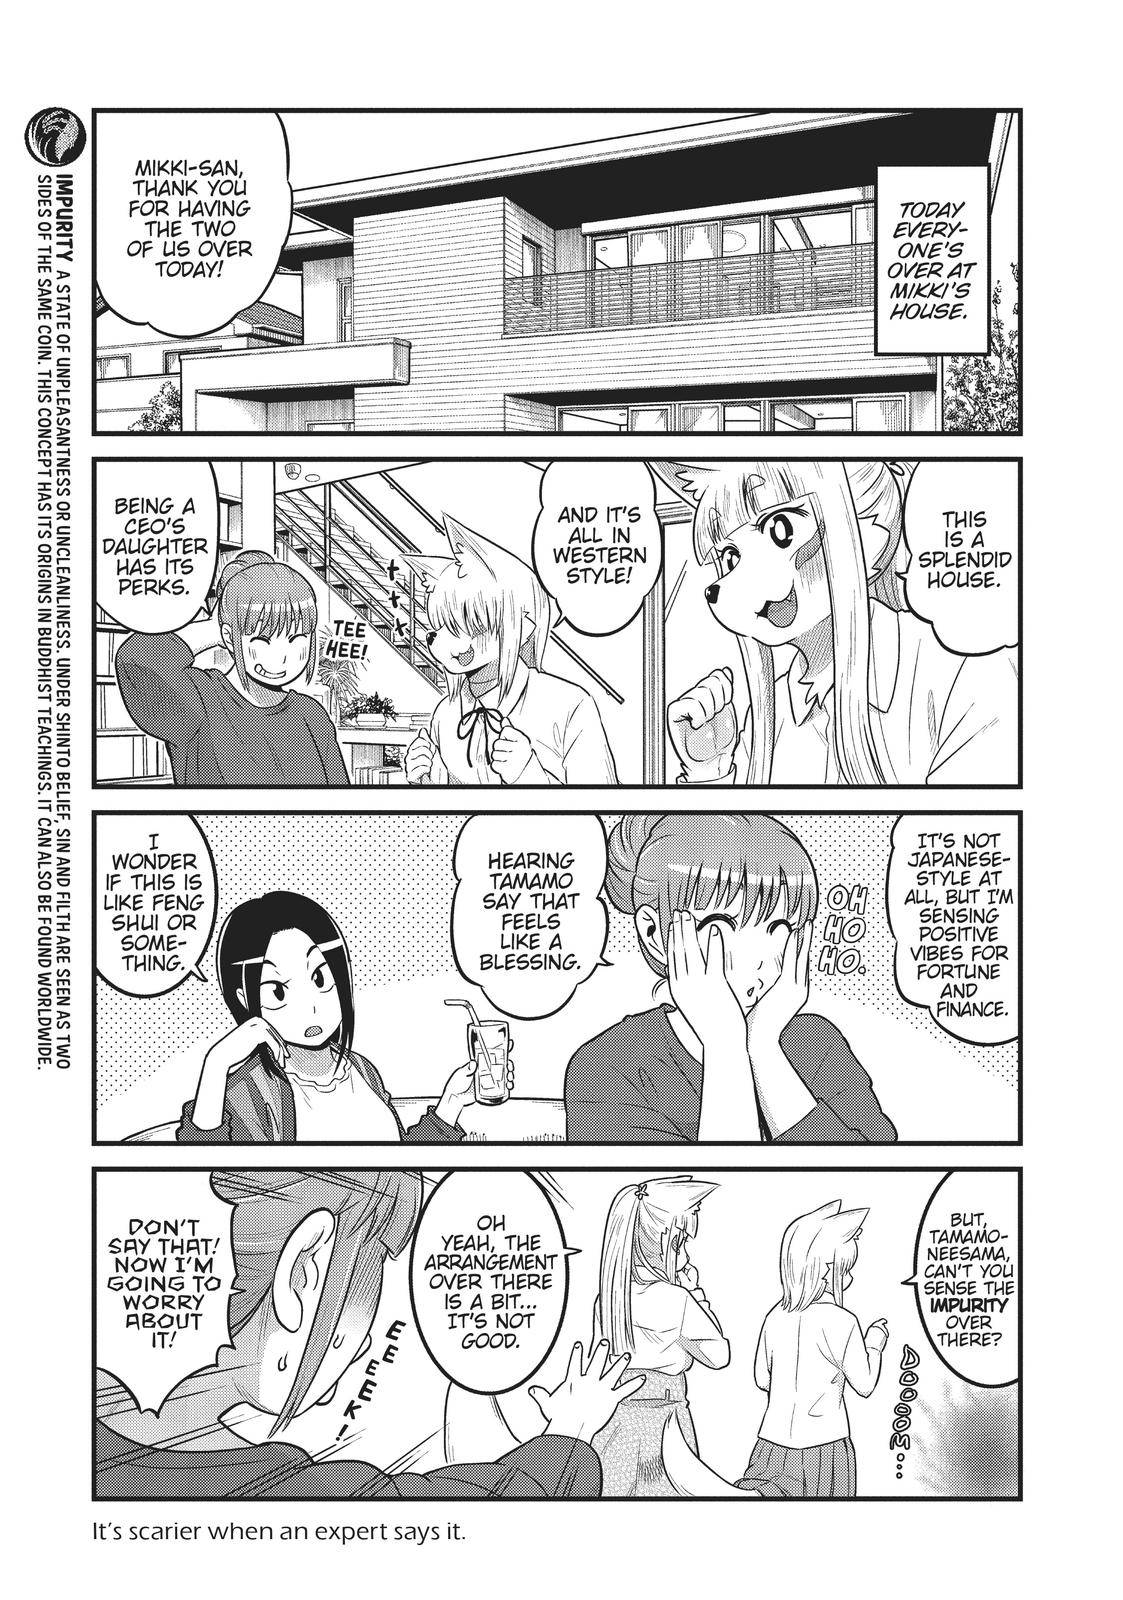 Tamamo-chan's a Fox! - chapter 28 - #3